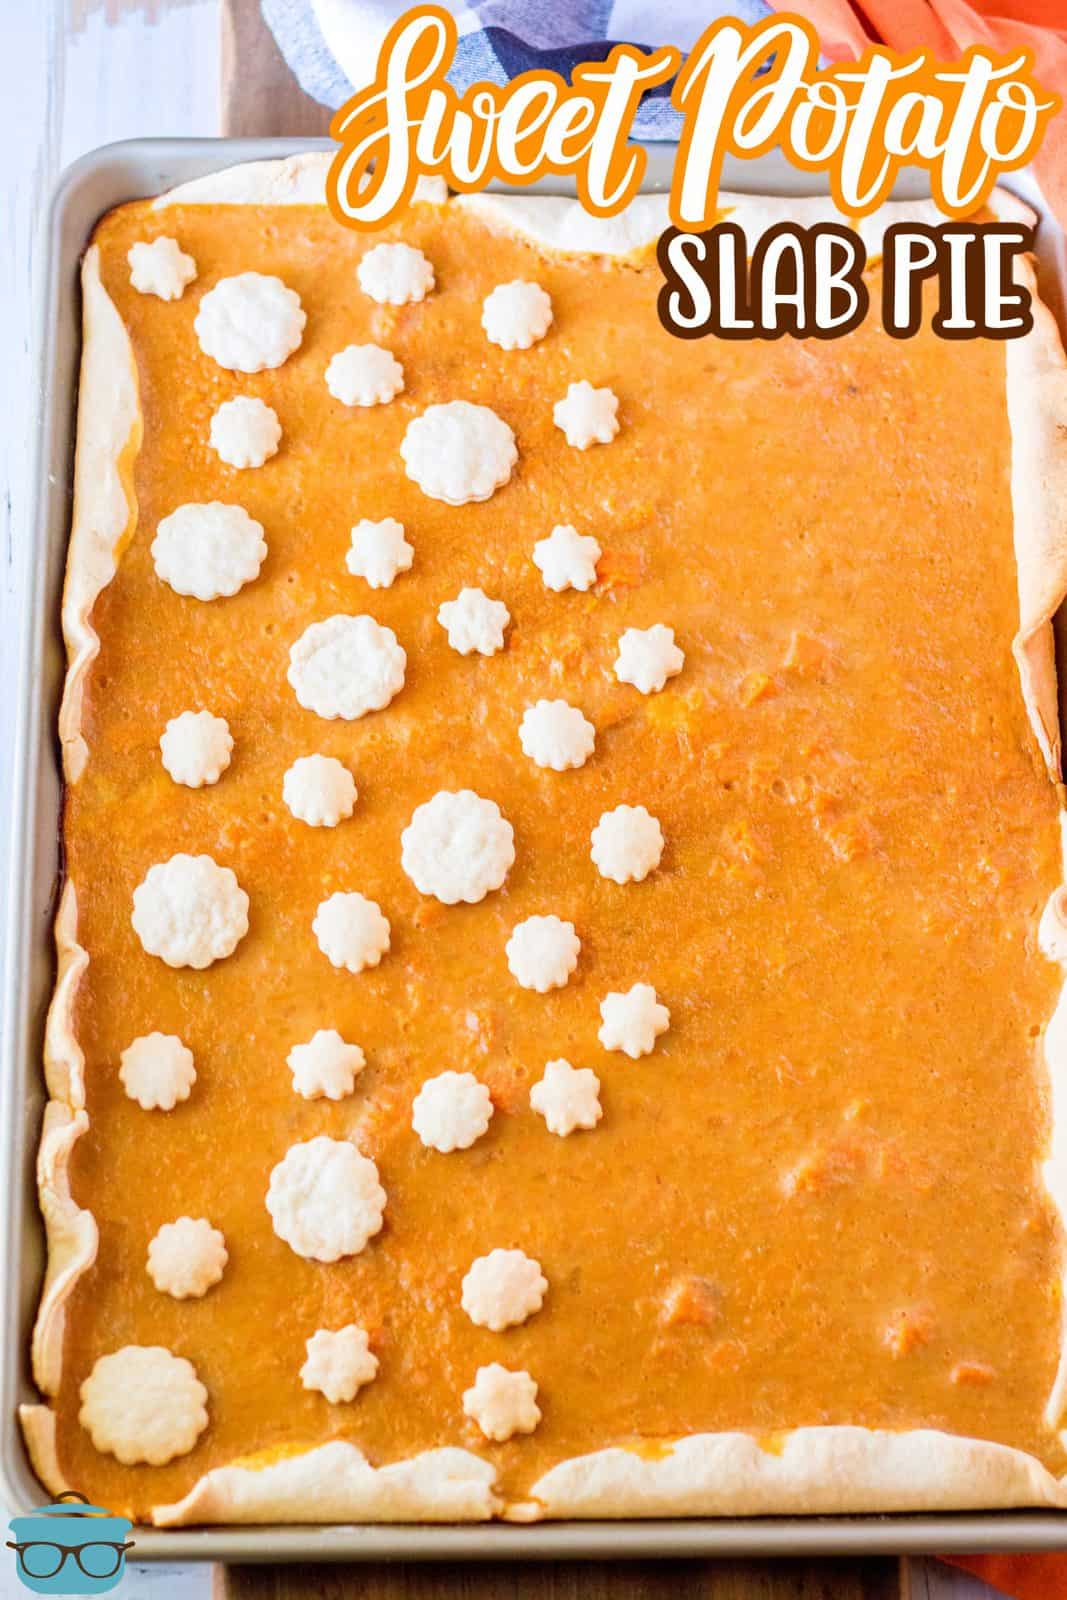 Pinterest image of finished Sweet Potato Slab Pie Recipe finished in pan.